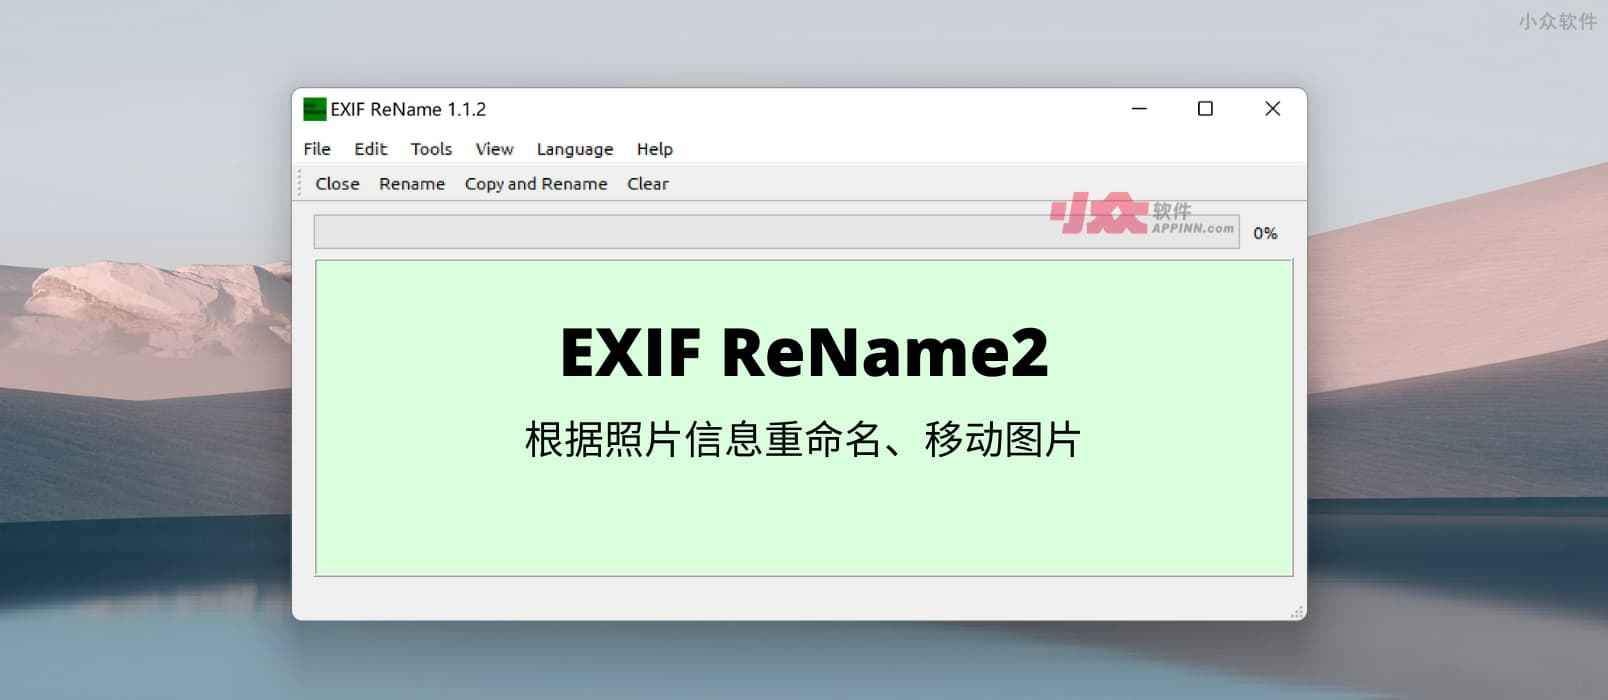 EXIF ReName 2 – 根据照片信息重命名、复制图片[Windows/Linux]